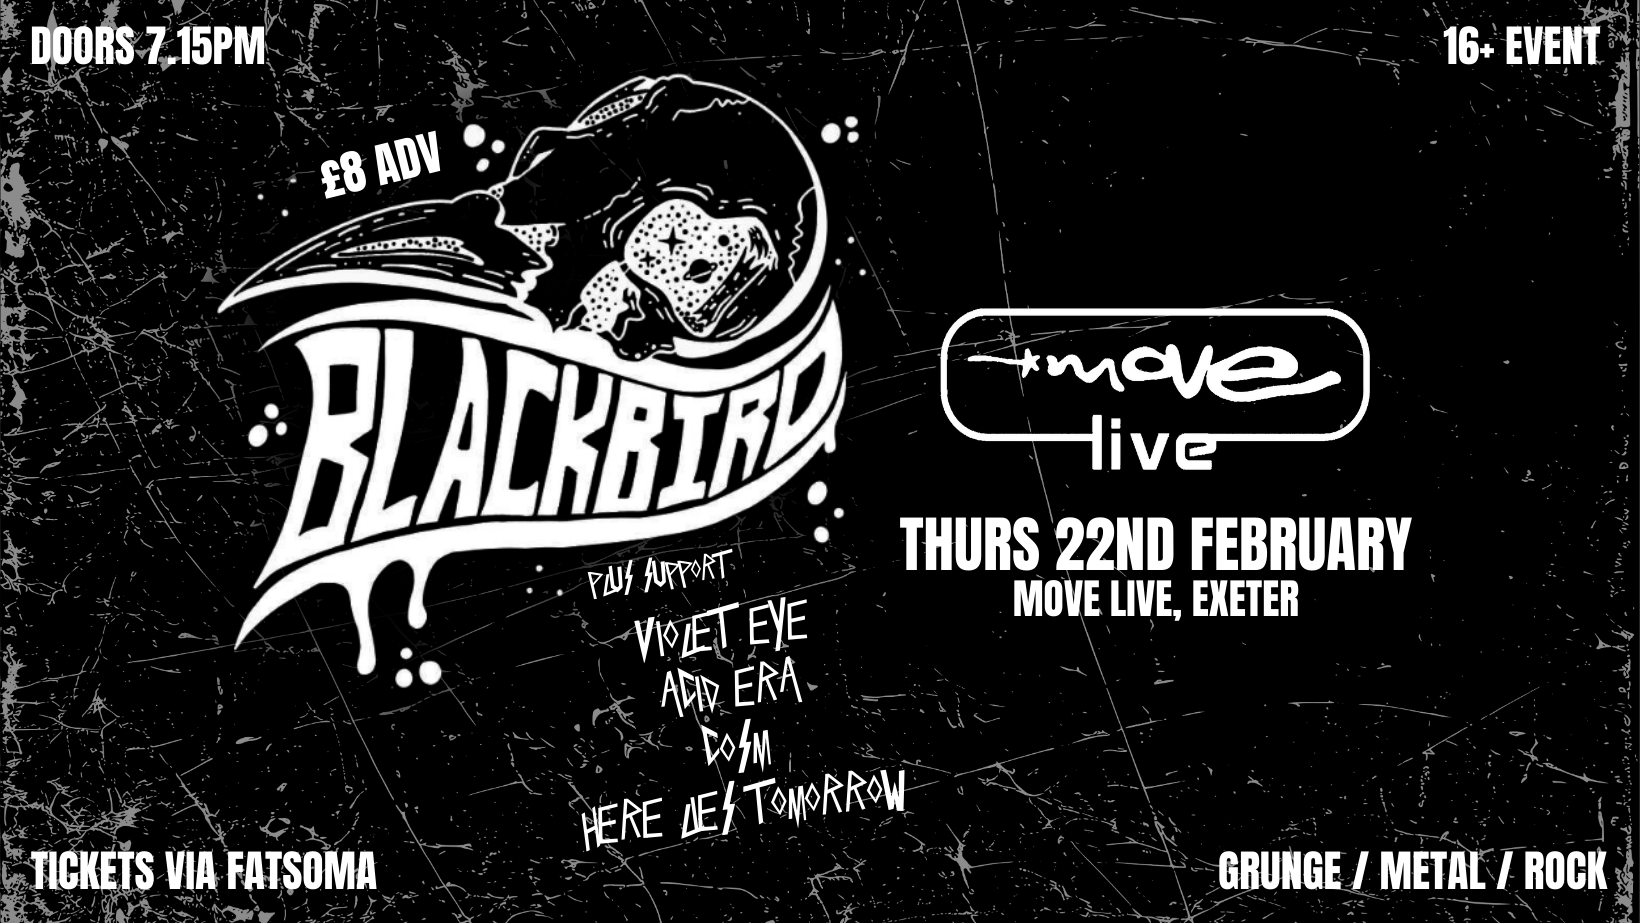 Blackbird, Violet Eye, Acid Era, Cosm & Here Lies Tomorrow (Grunge, Metal Rock) live at Move, Exeter